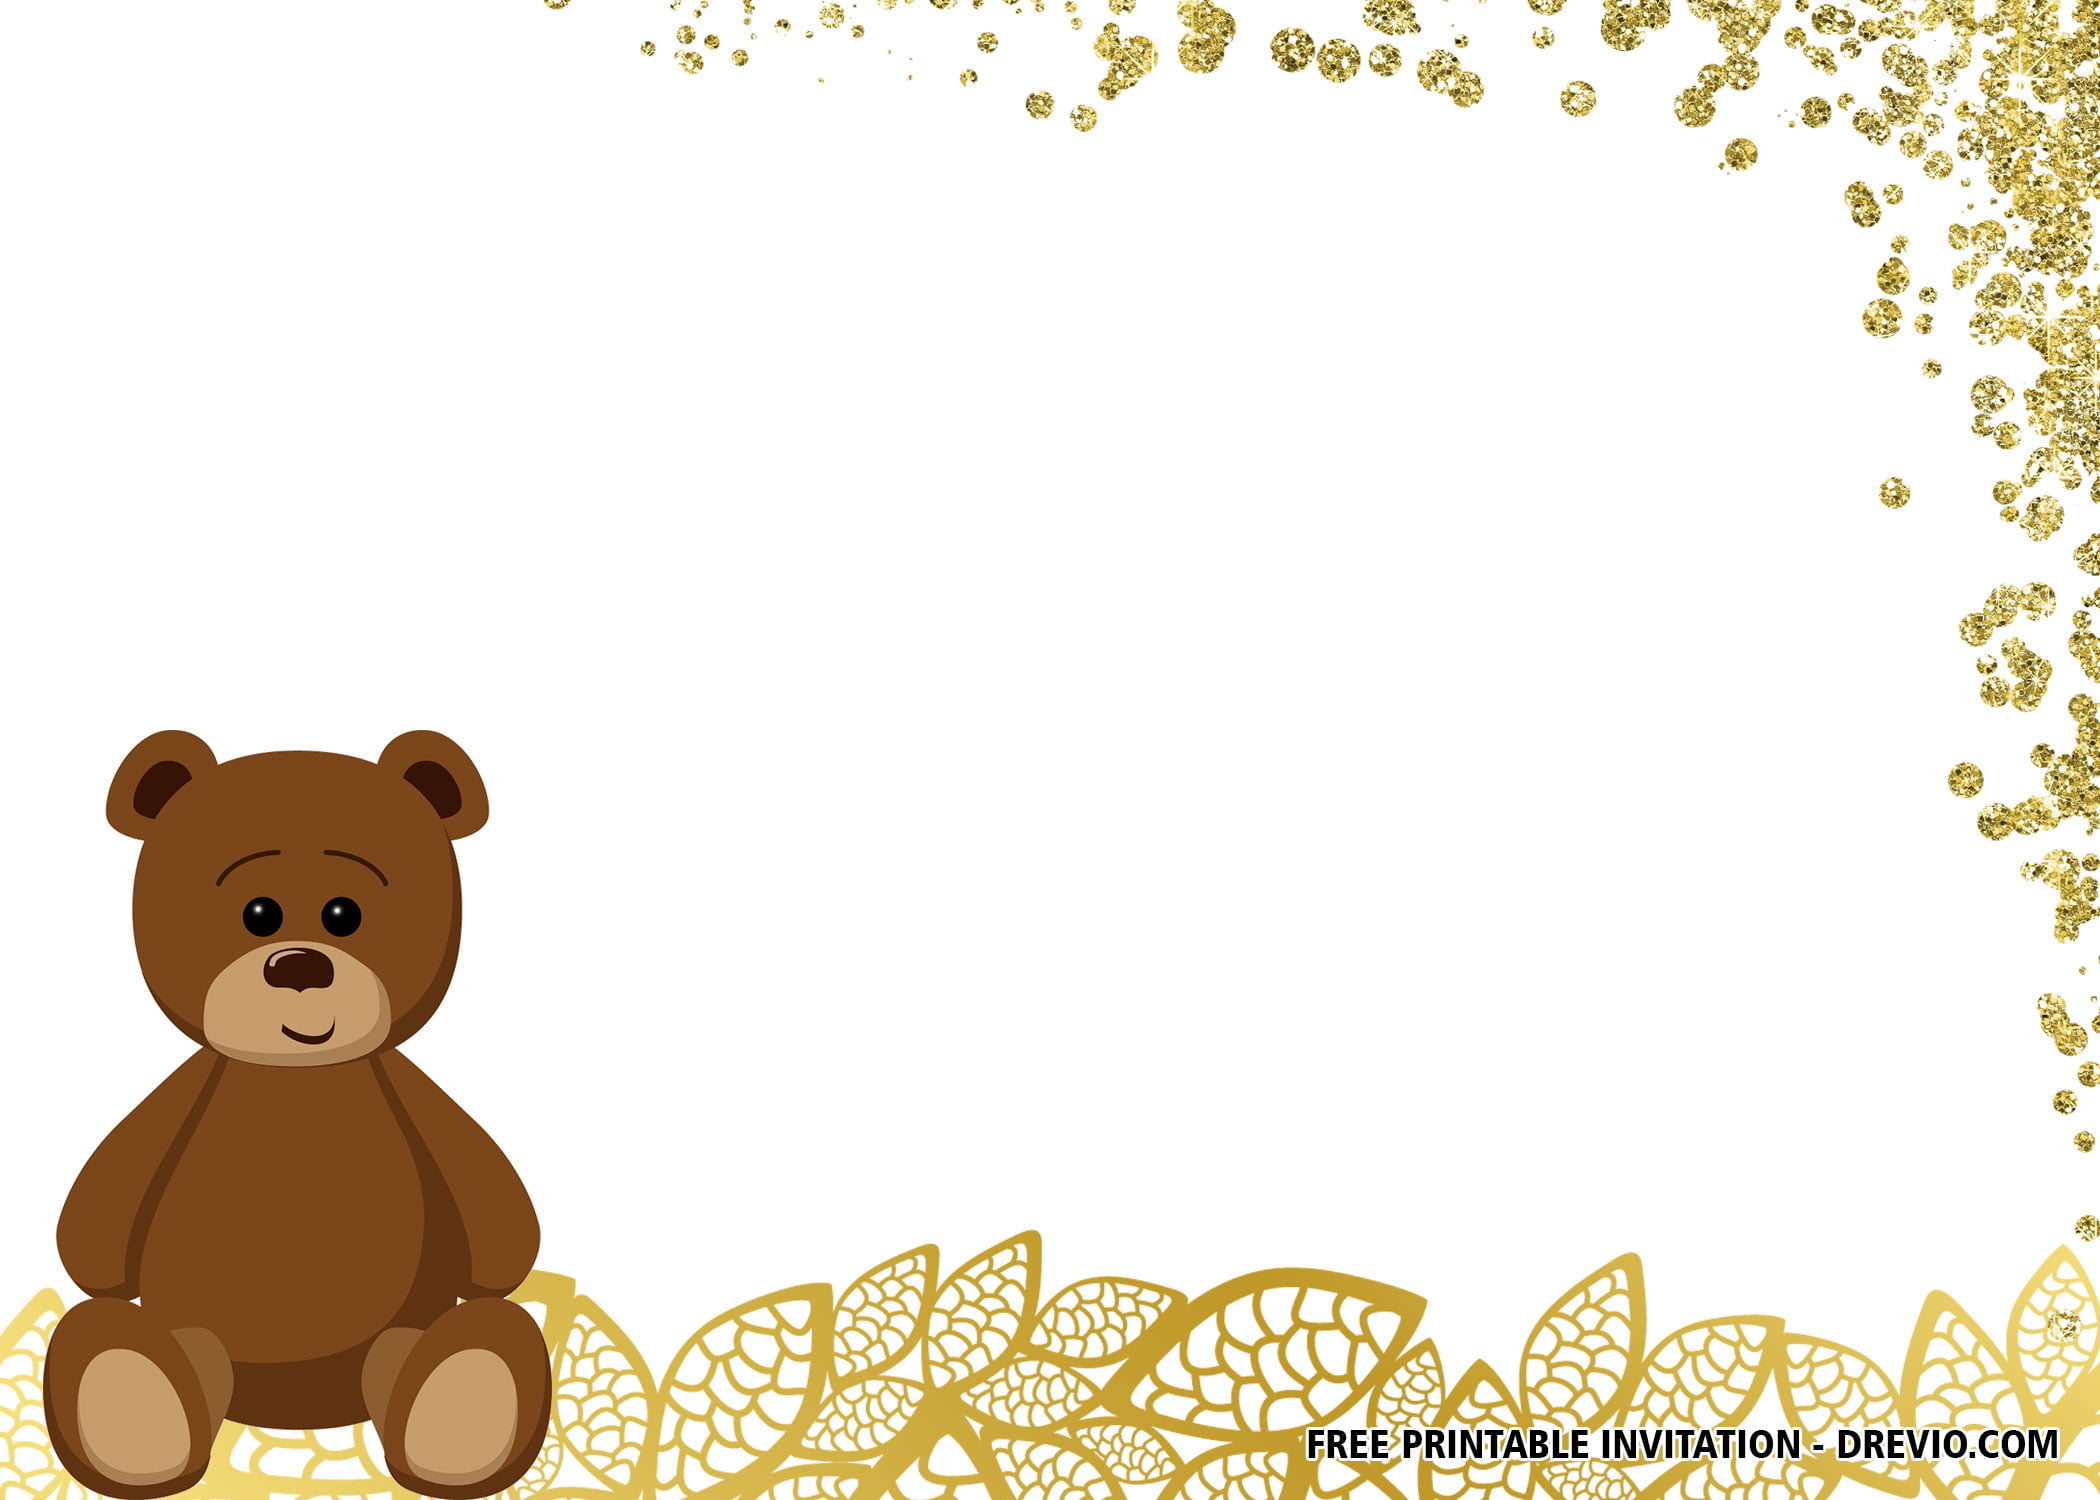 FREE Teddy Bear Invitation Templates Download Hundreds FREE PRINTABLE